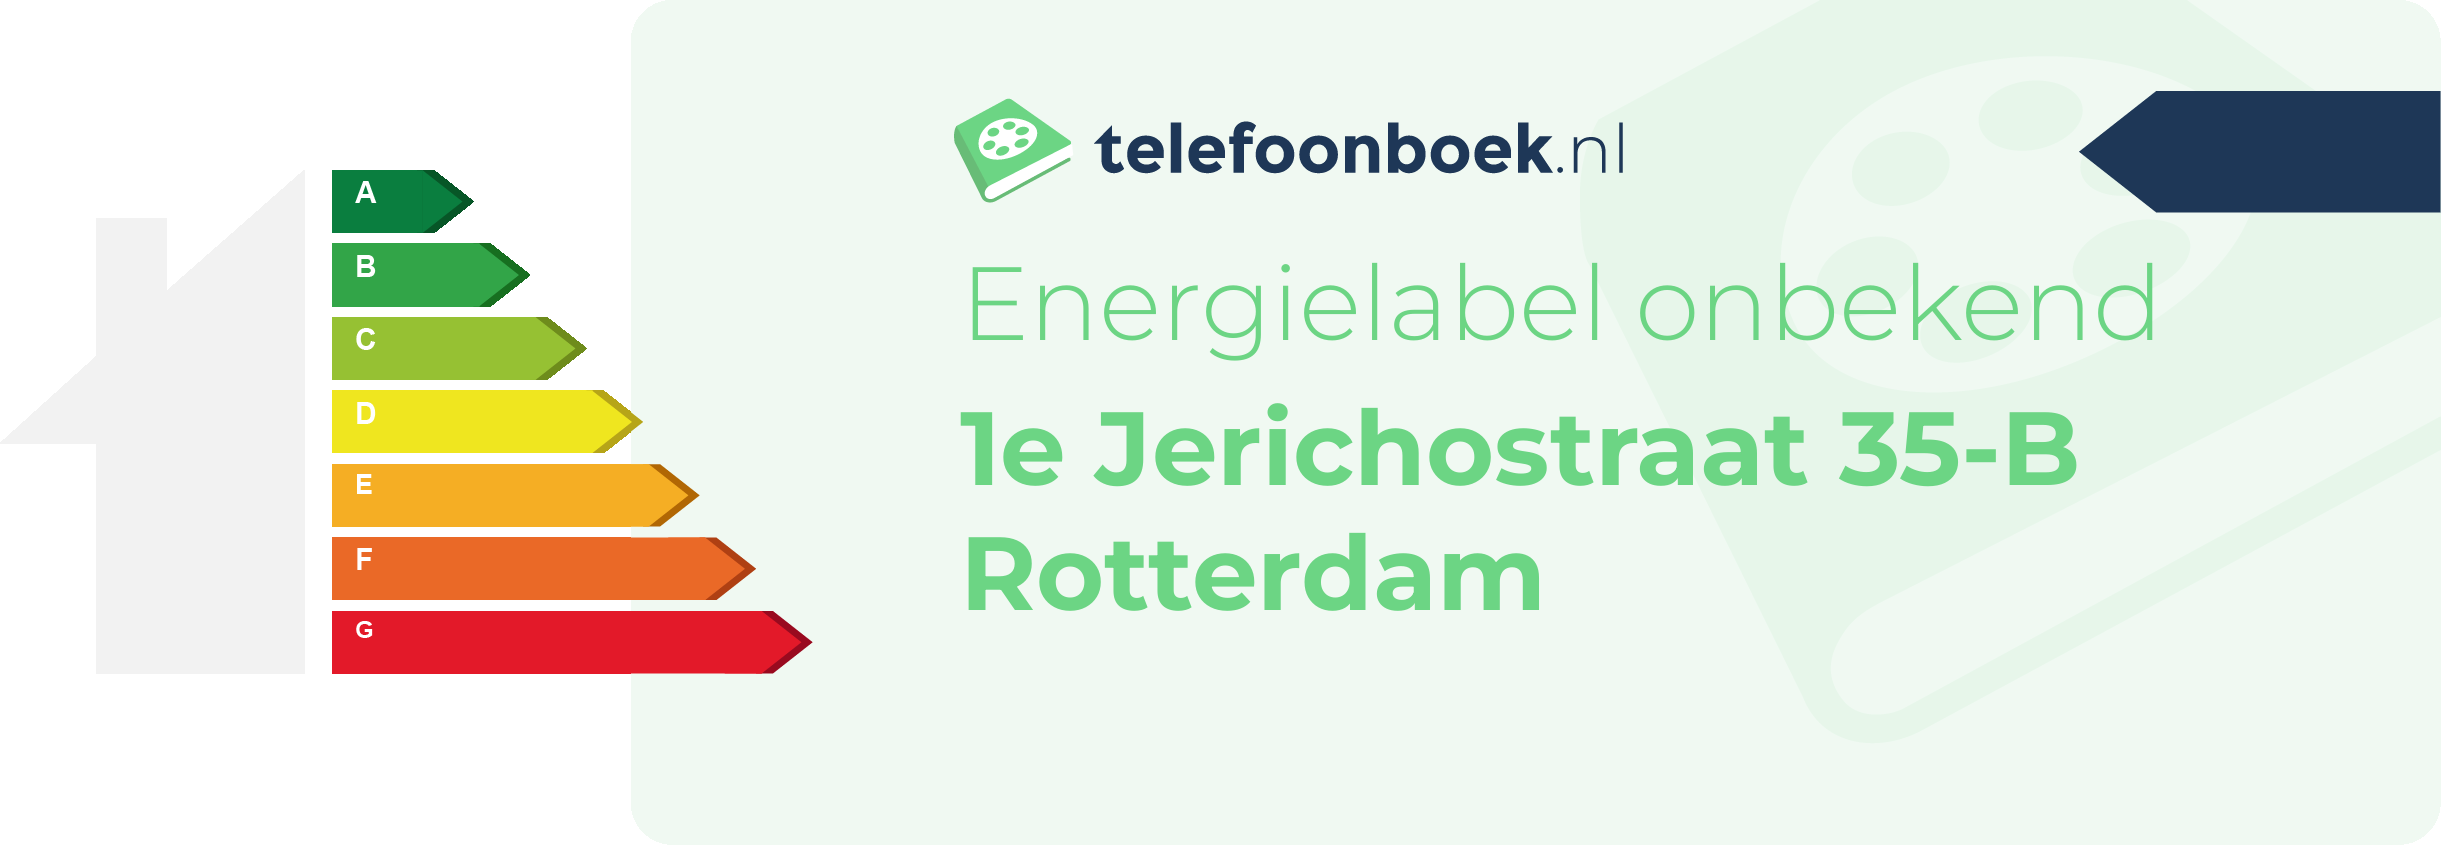 Energielabel 1e Jerichostraat 35-B Rotterdam